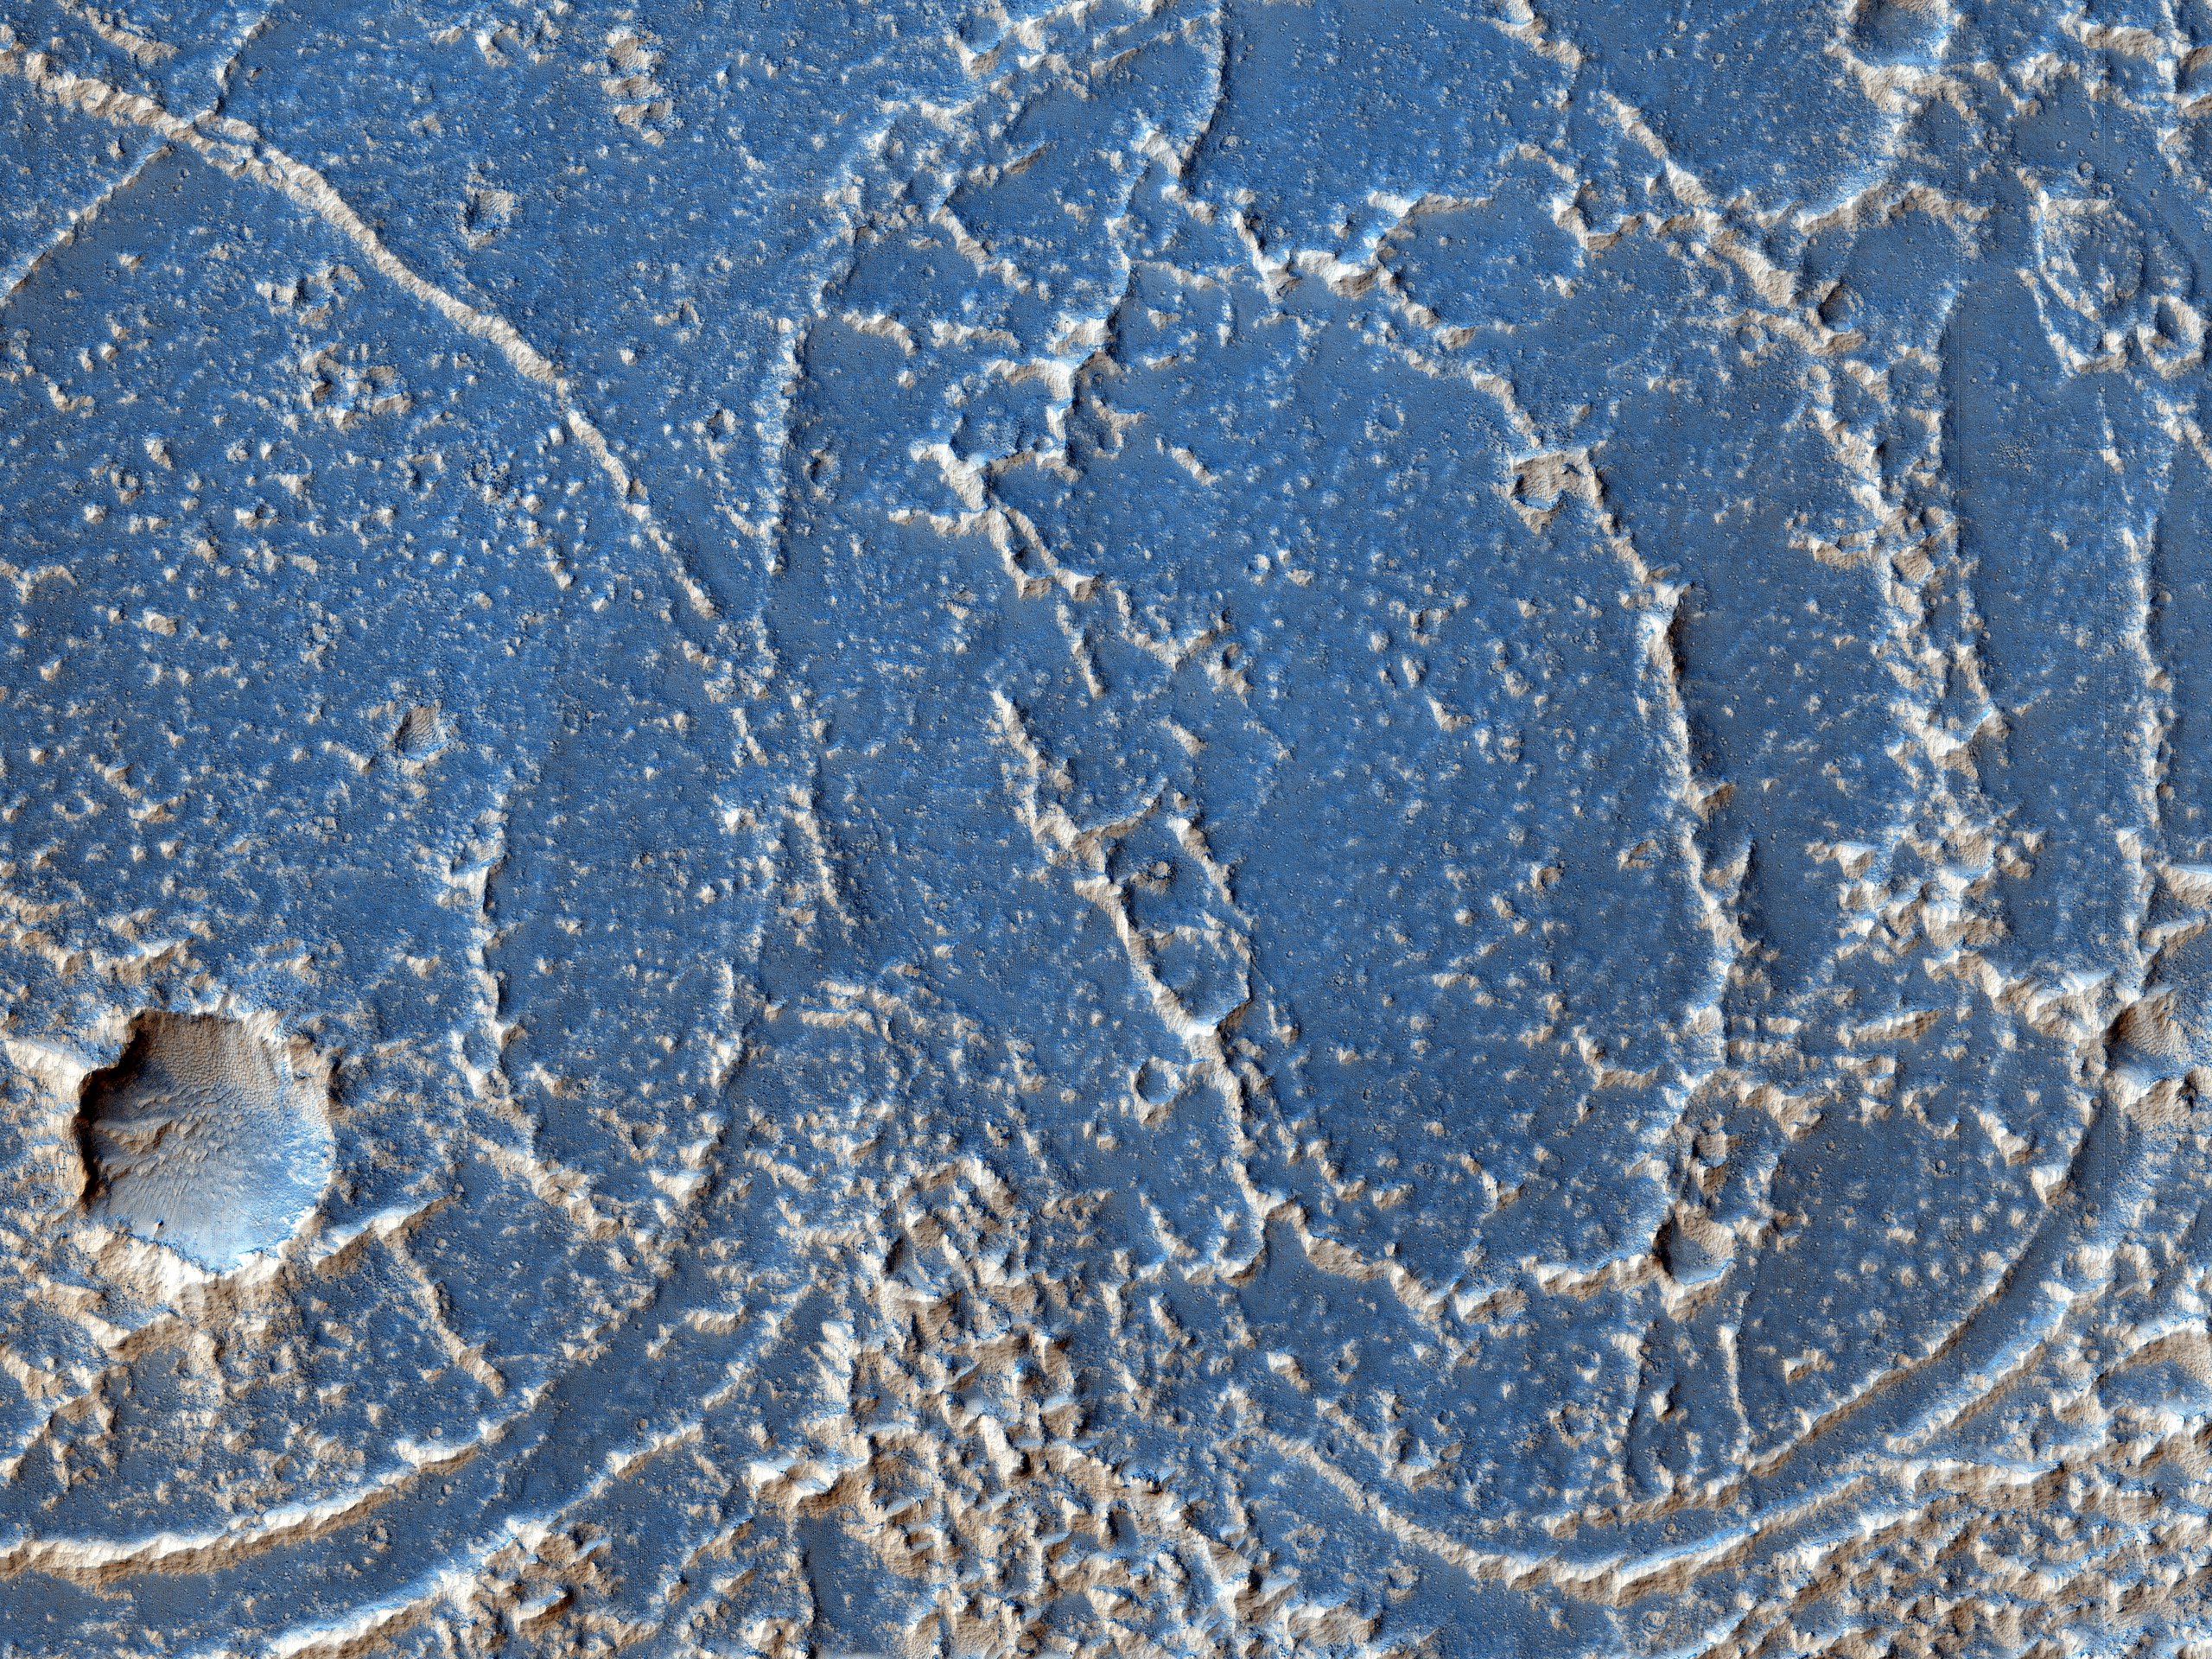 Strange Patterns in Echus Chasma